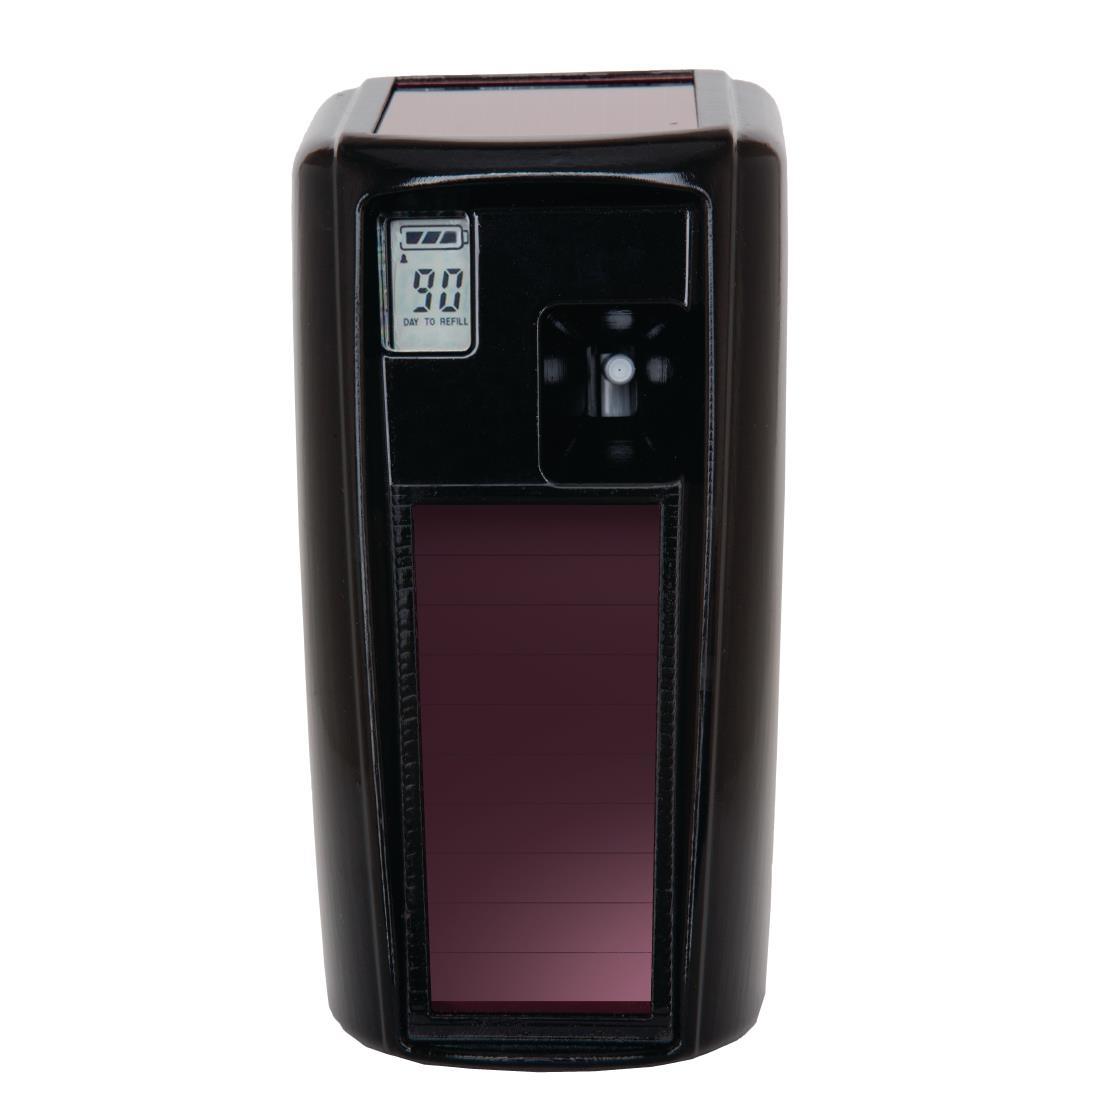 Rubbermaid Lumecel Automatic Air Freshener Dispenser Black